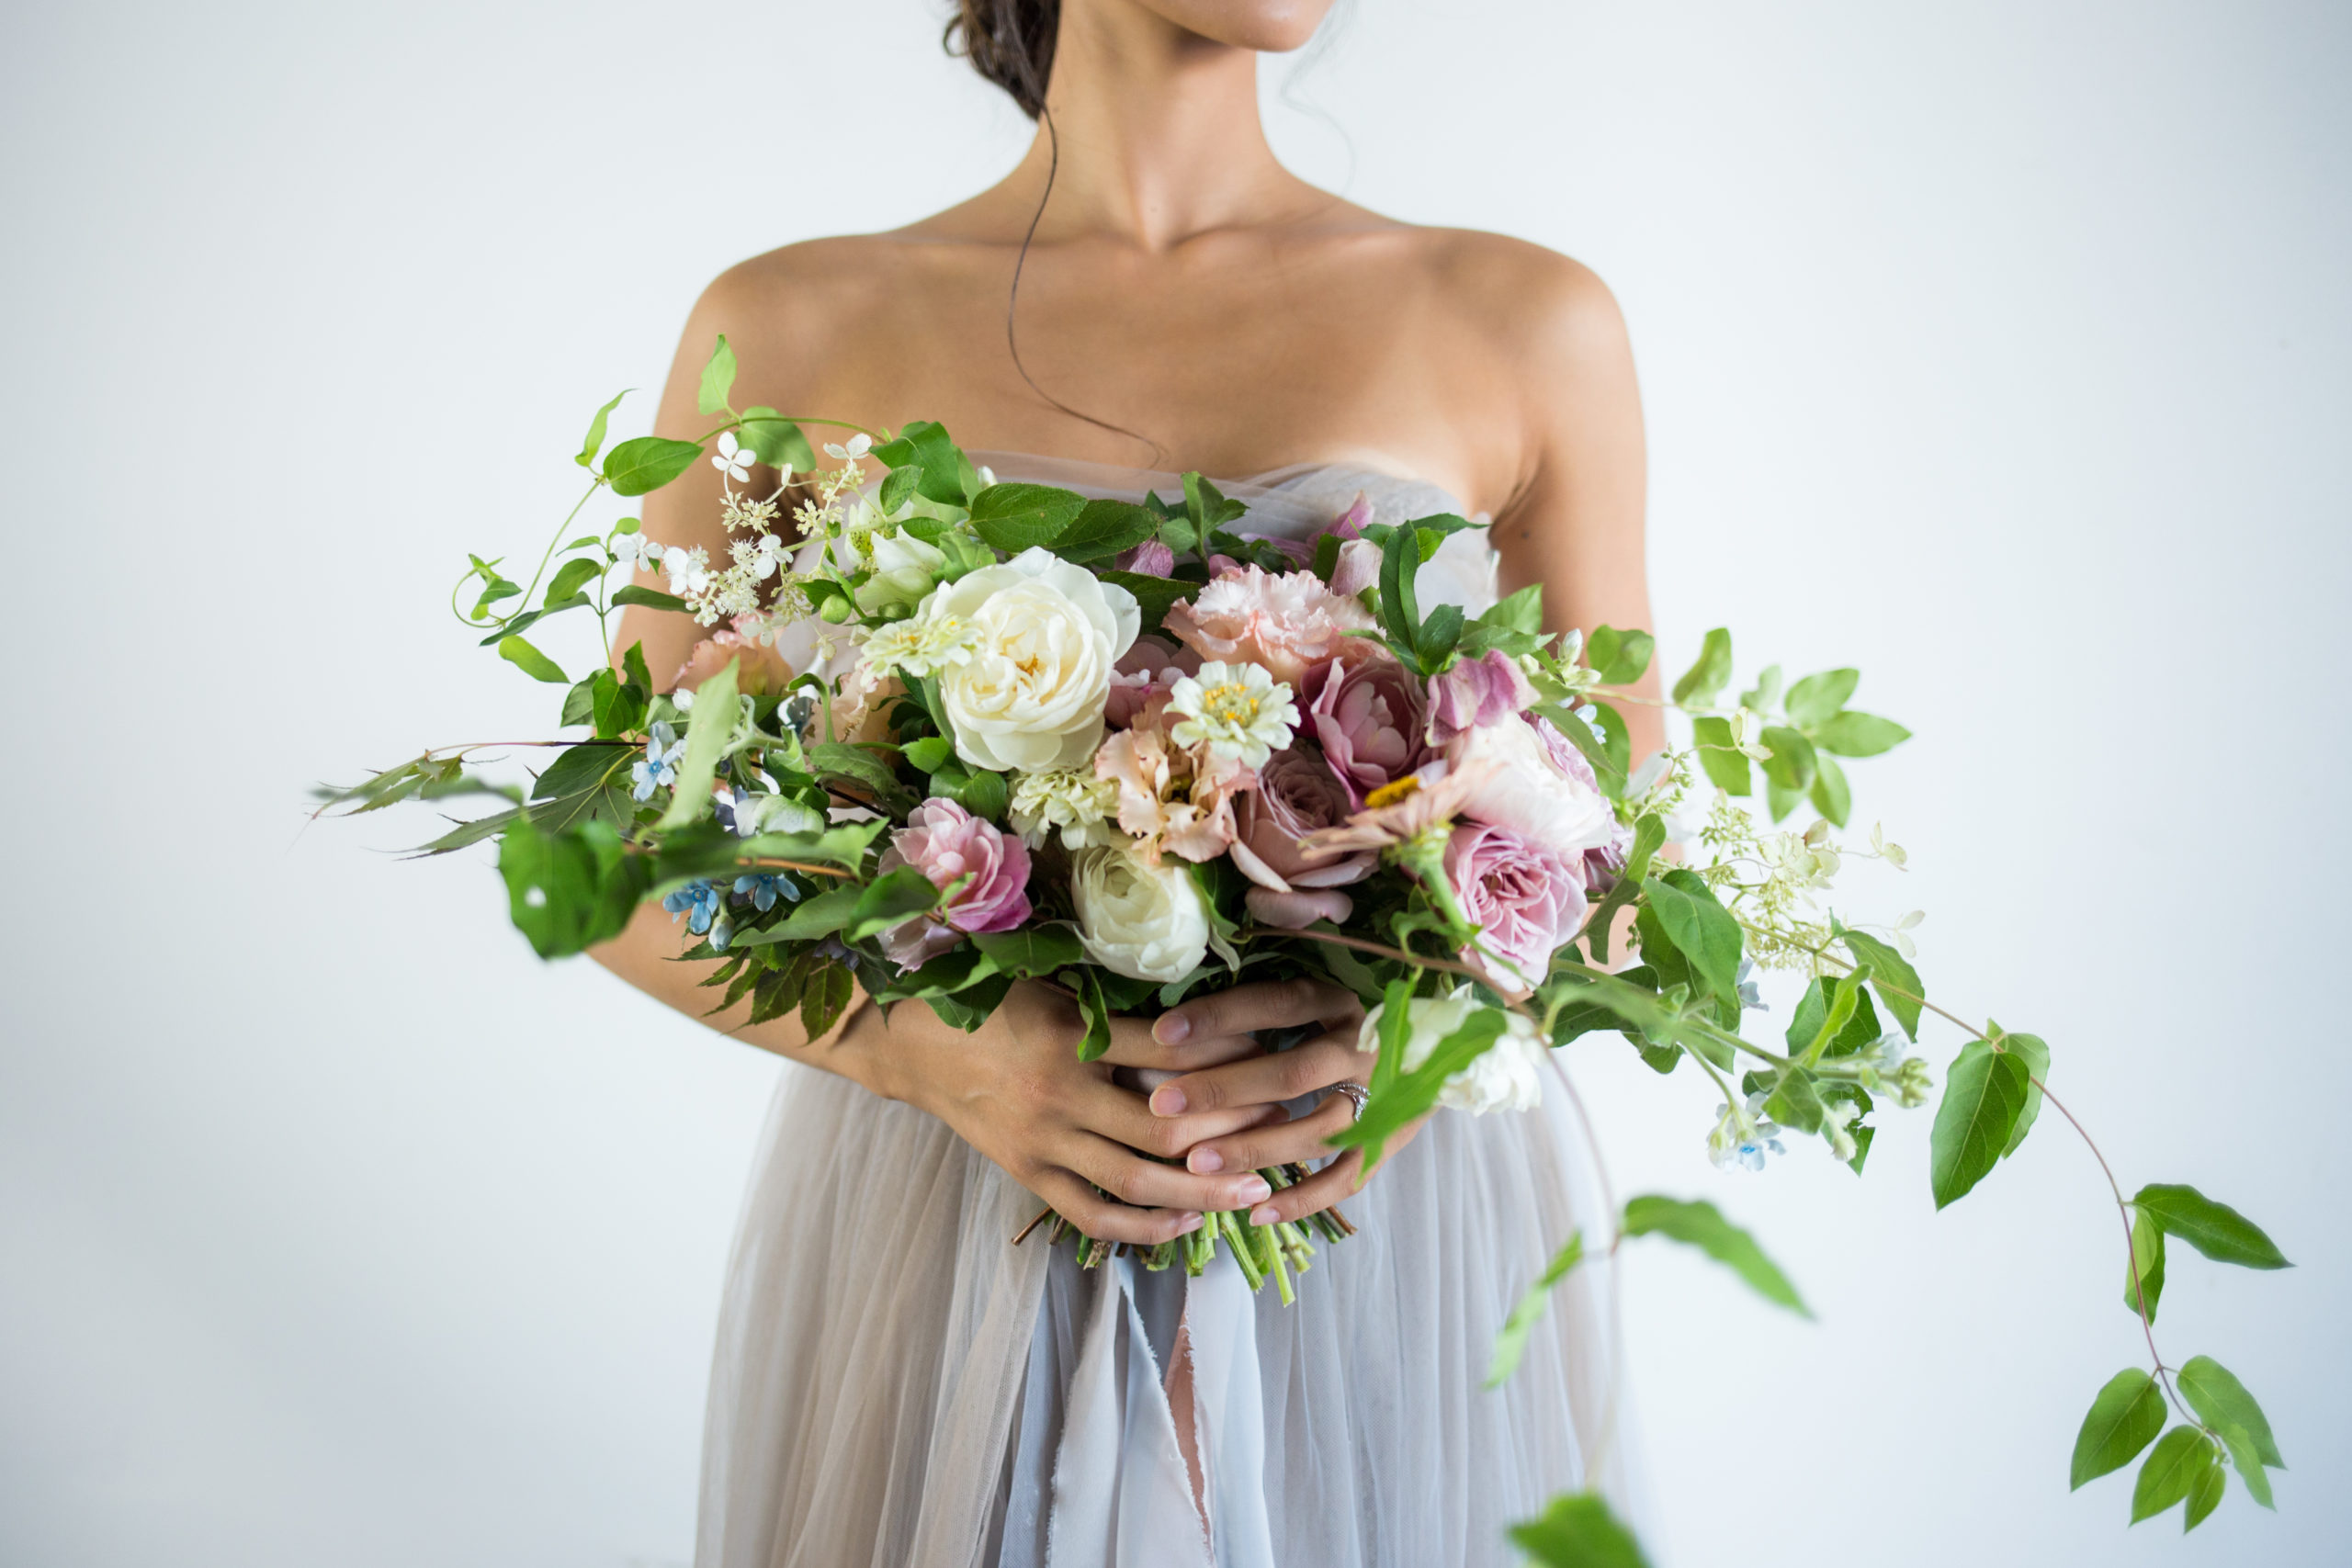 Bridal bouquet florals by beautiful/wild design - Christine Quarte Photography